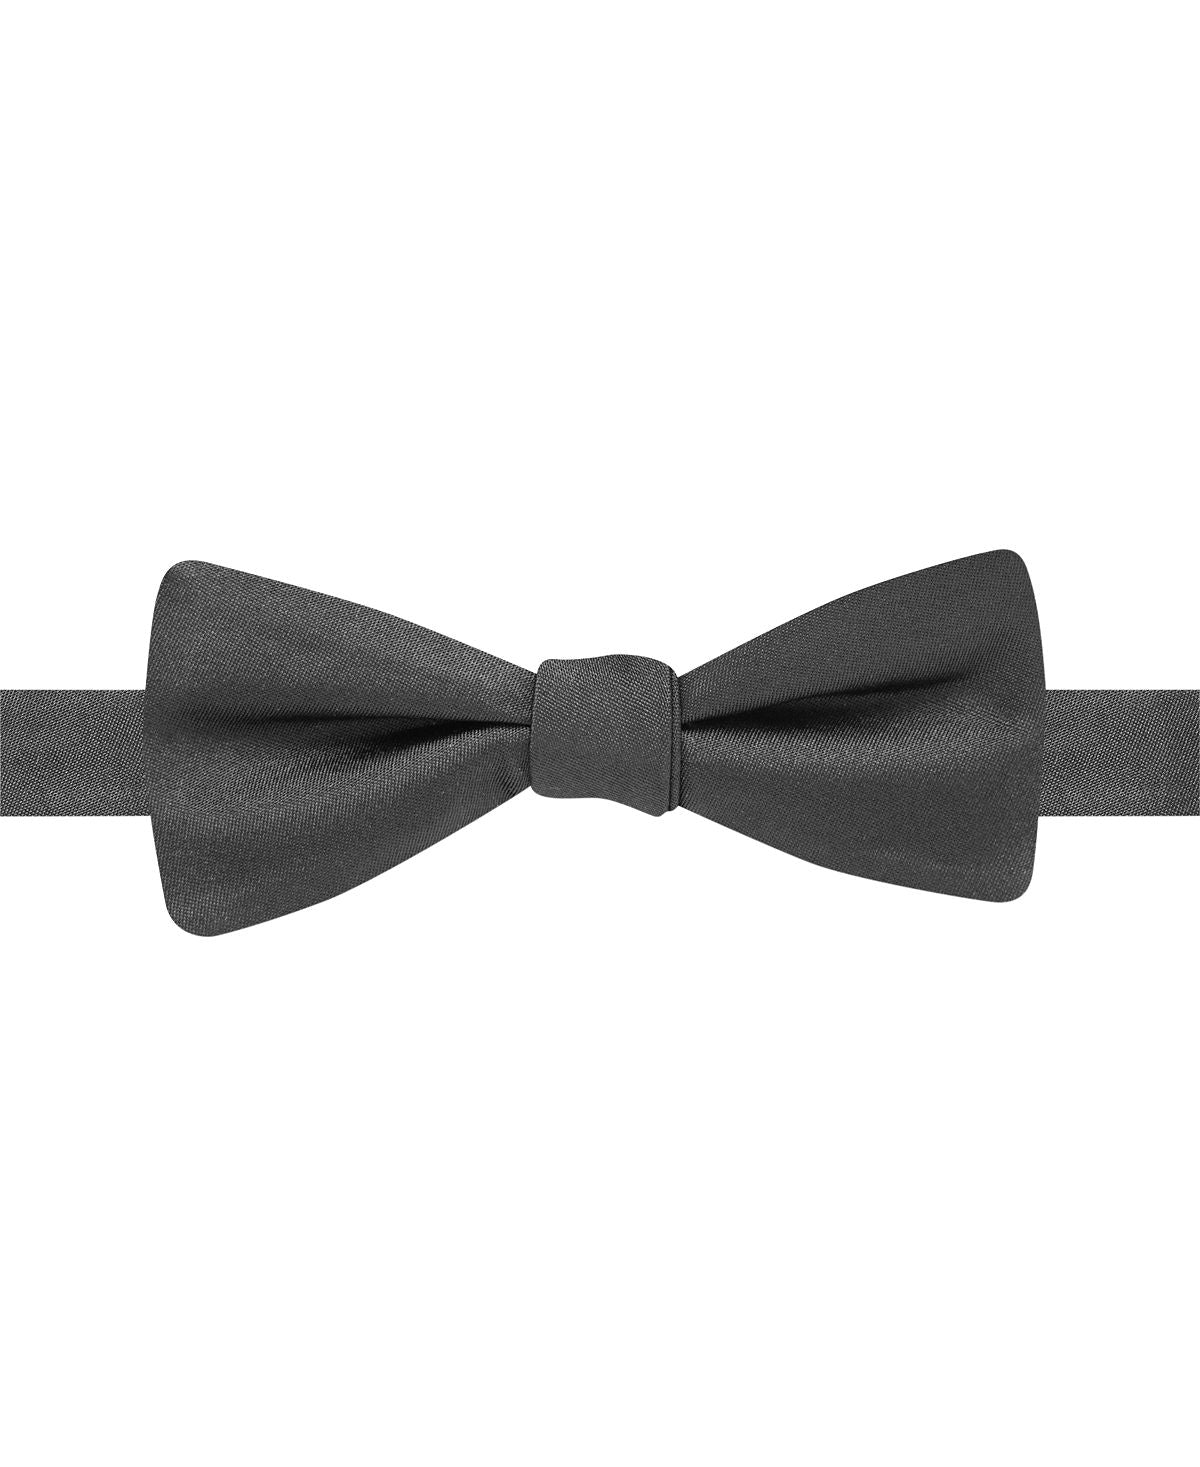 Ryan Seacrest Distinction Solid To-tie Bow Tie Black